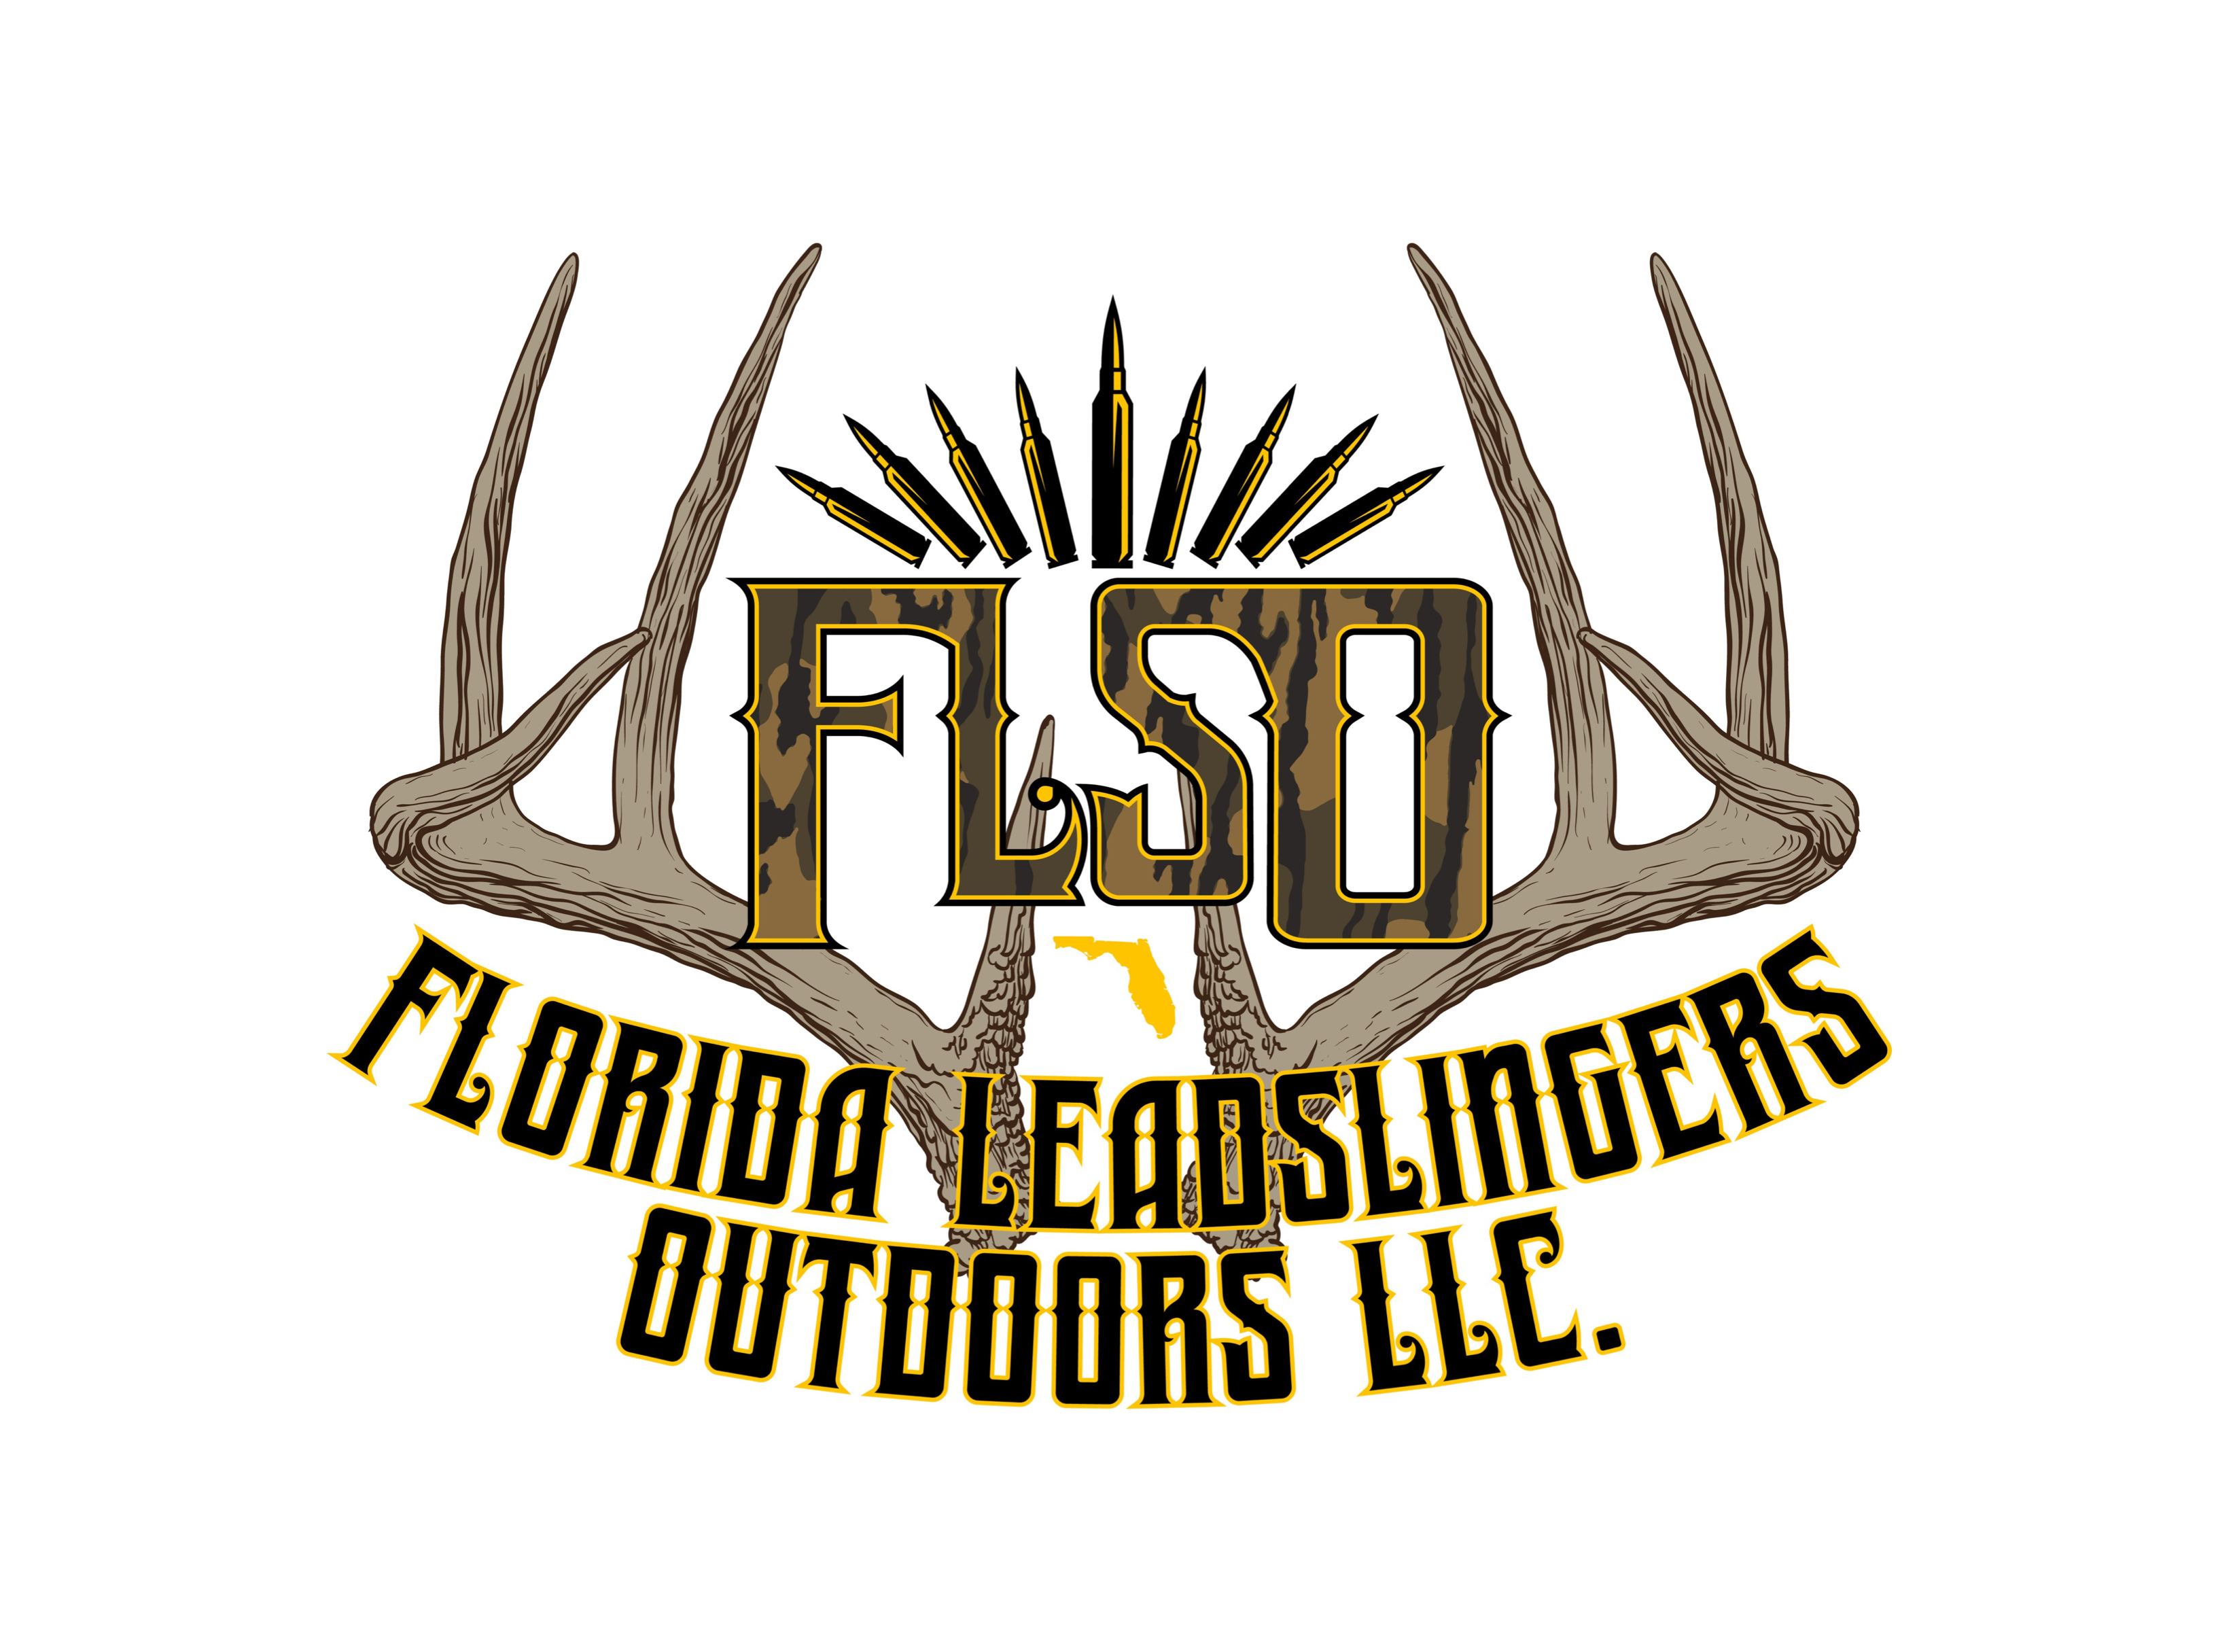 Florida LeadSlingers Outdoors 